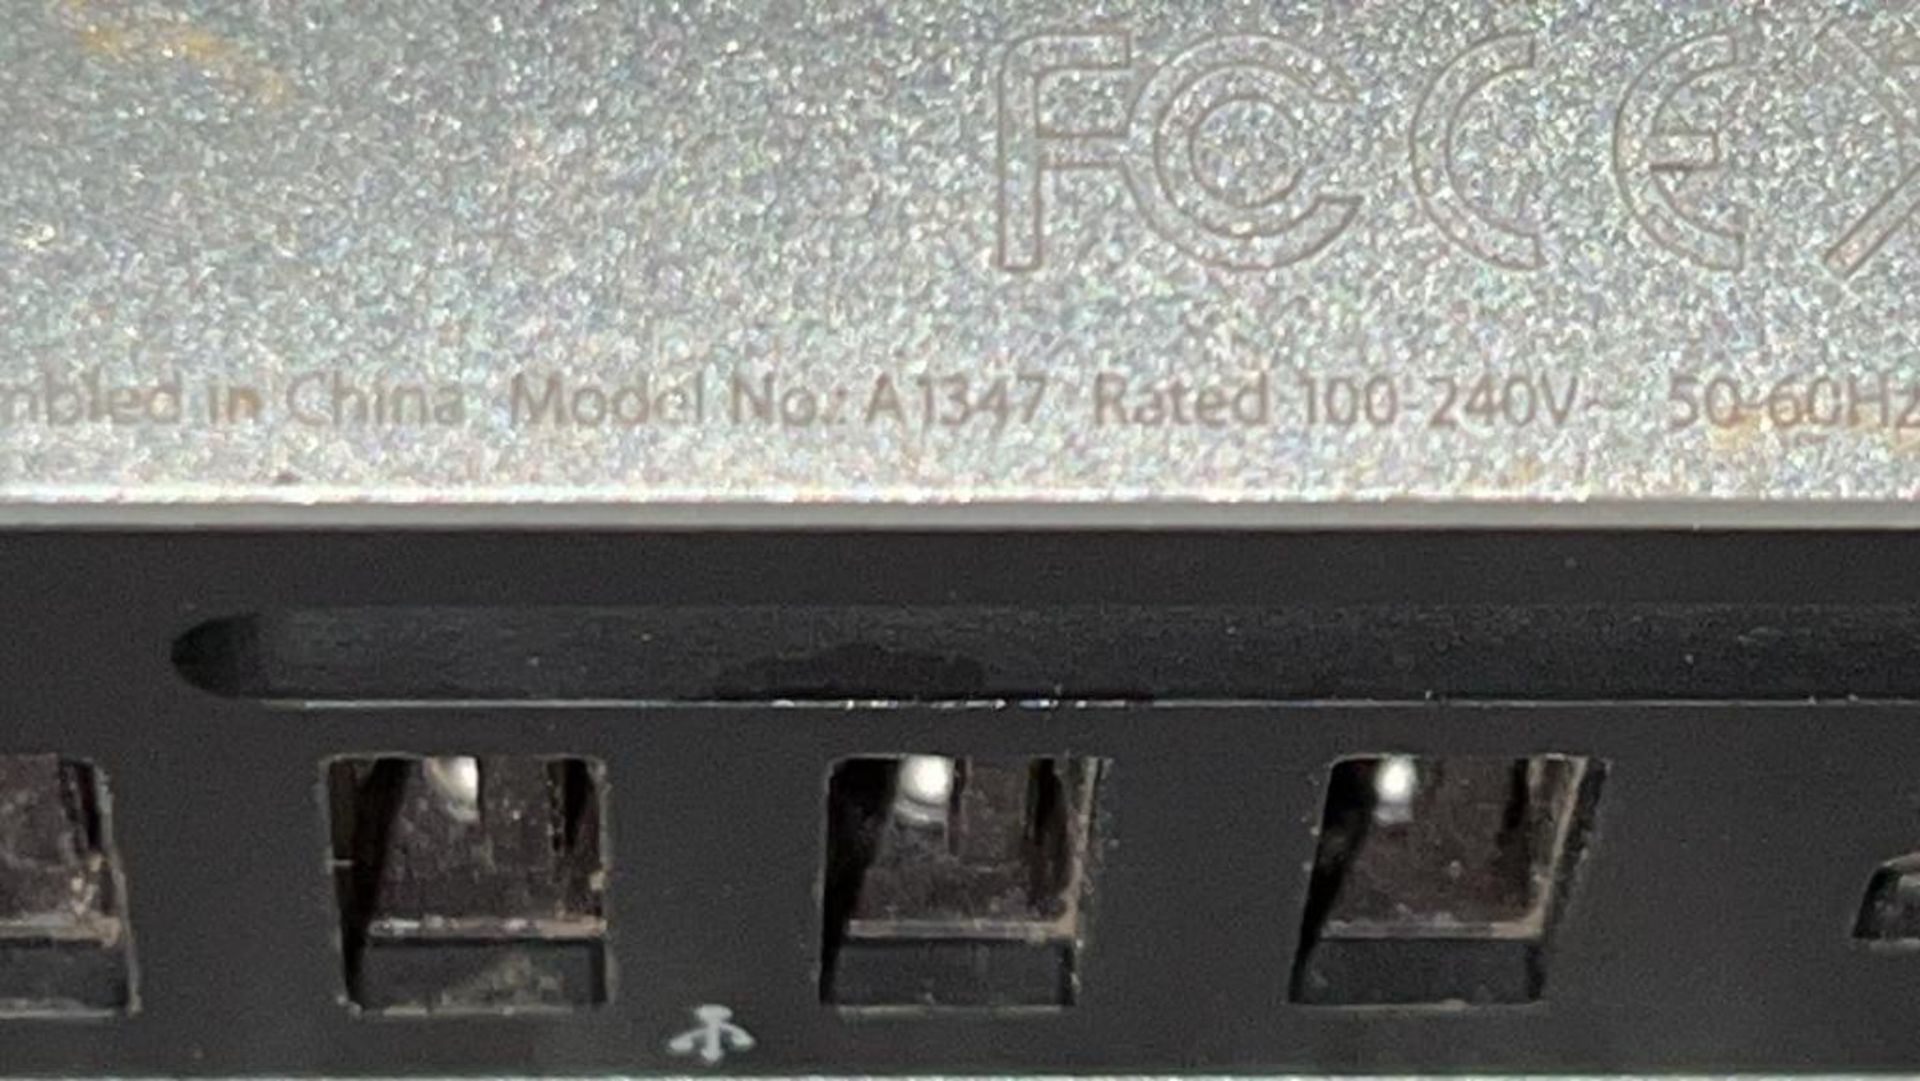 MAC mini server - late 2010, model A1347- spec unknown - Image 5 of 7